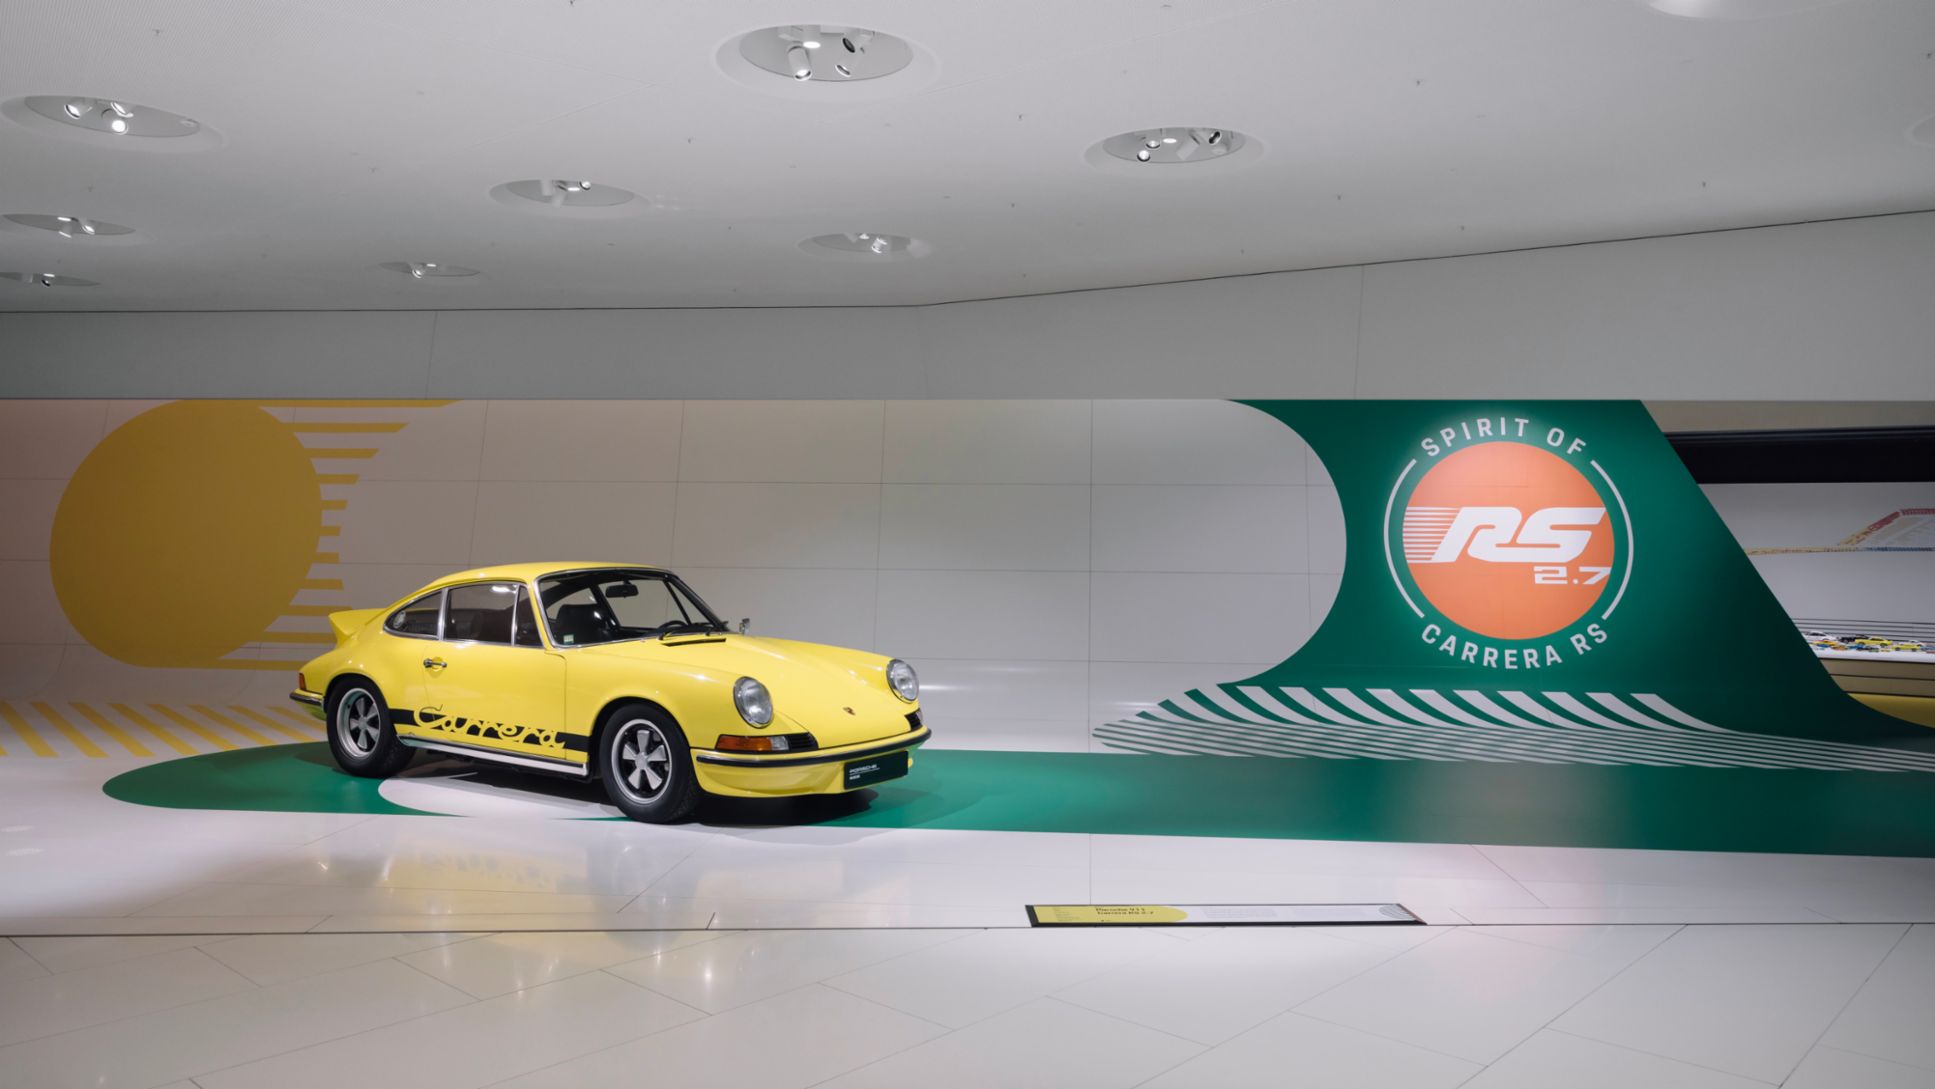 911 Carrera RS 2.7 in Touring spec, “Spirit of Carrera RS” special exhibition, Porsche Museum, Zuffenhausen, 2022, Porsche AG